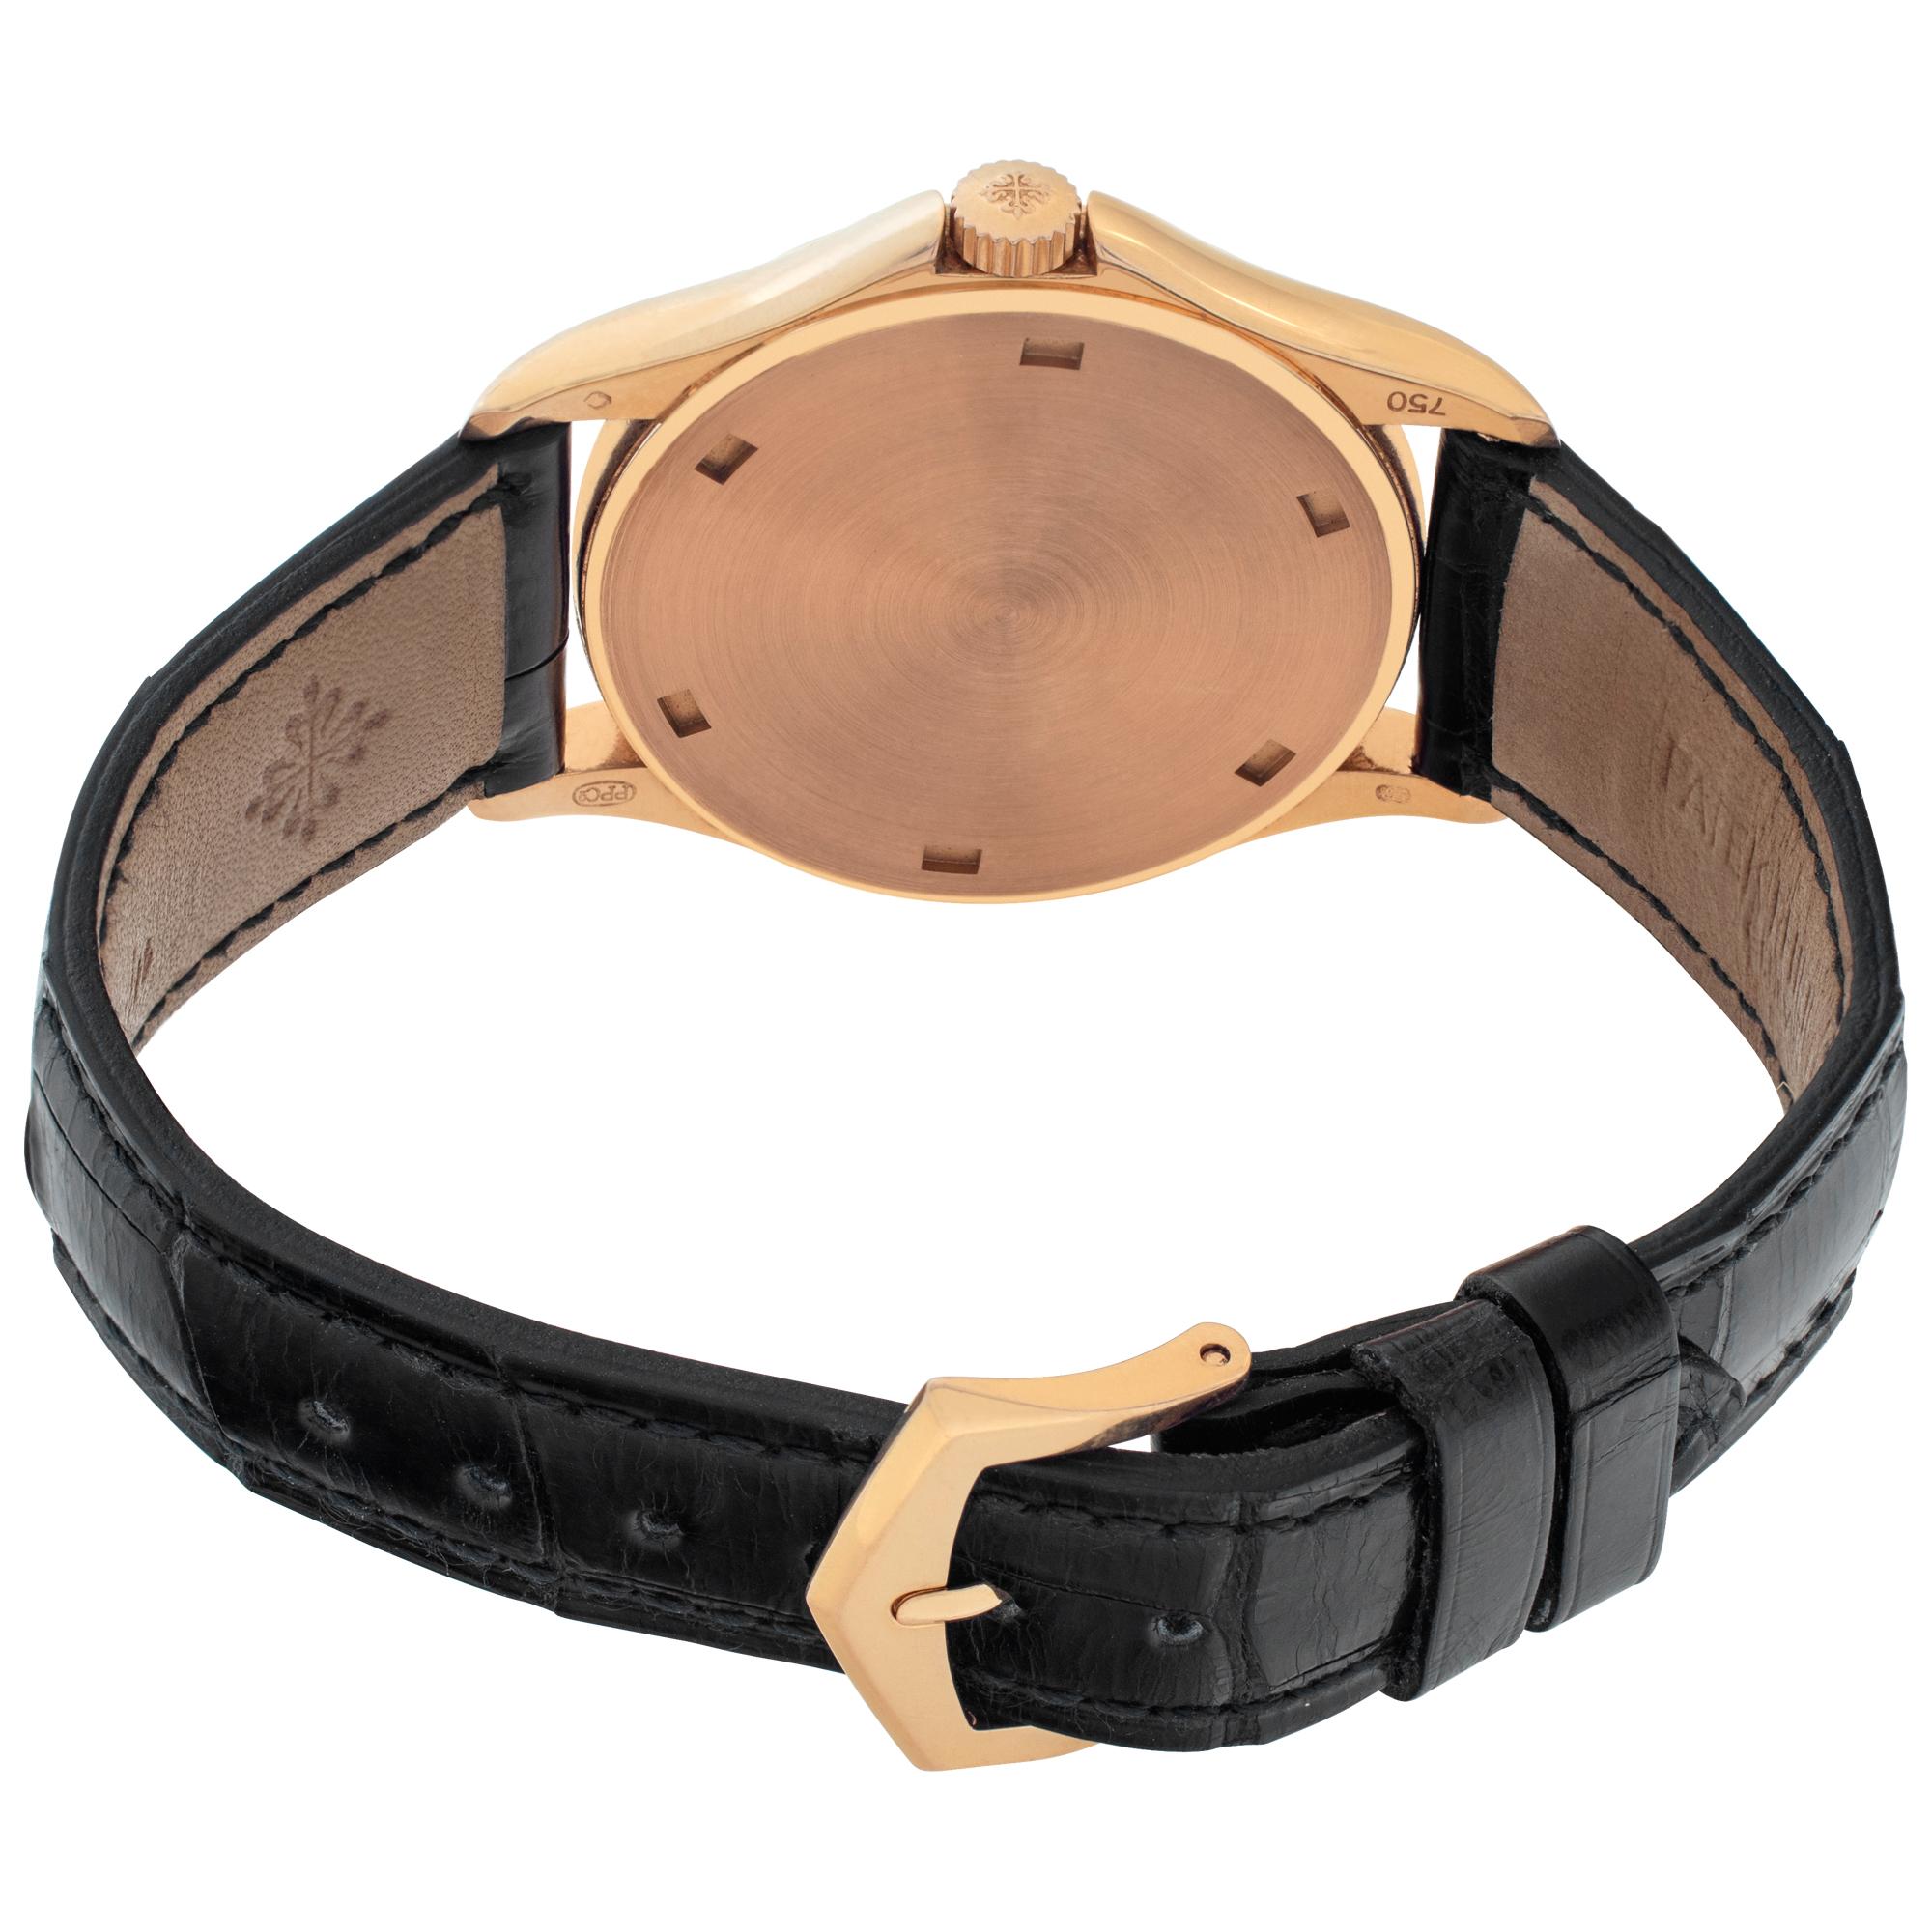 Patek Philippe Calatrava 18k Rose Gold Wristwatch Ref 5115R-001 In Excellent Condition For Sale In Surfside, FL